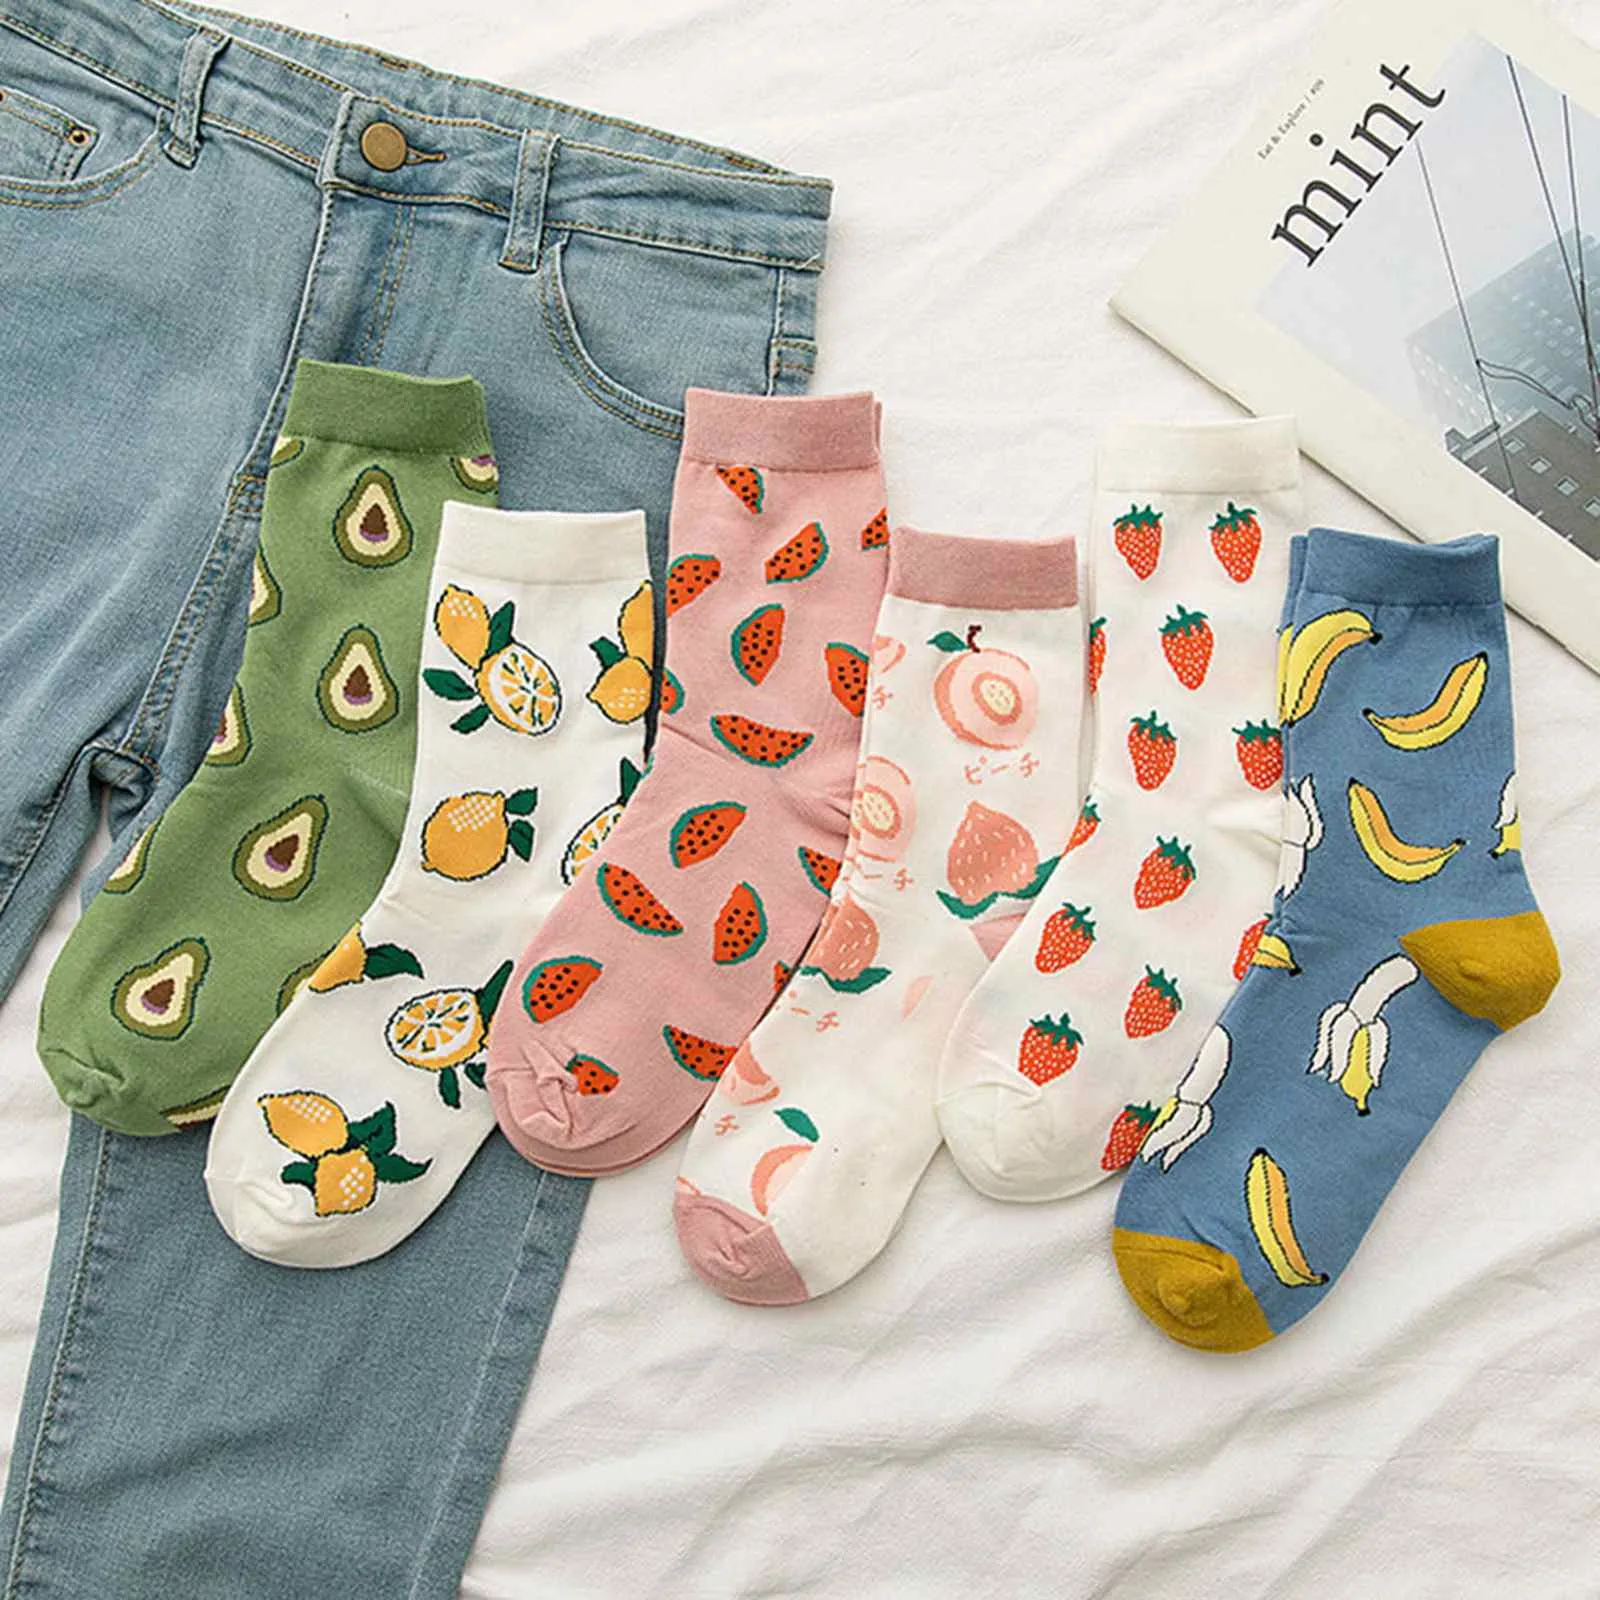 

6 Pairs ladies socks Harajuku Cute banana/Avocado/Pineapple Novelty Socks Women Kawaii Fruit Socks Funny Calcetines Mujer